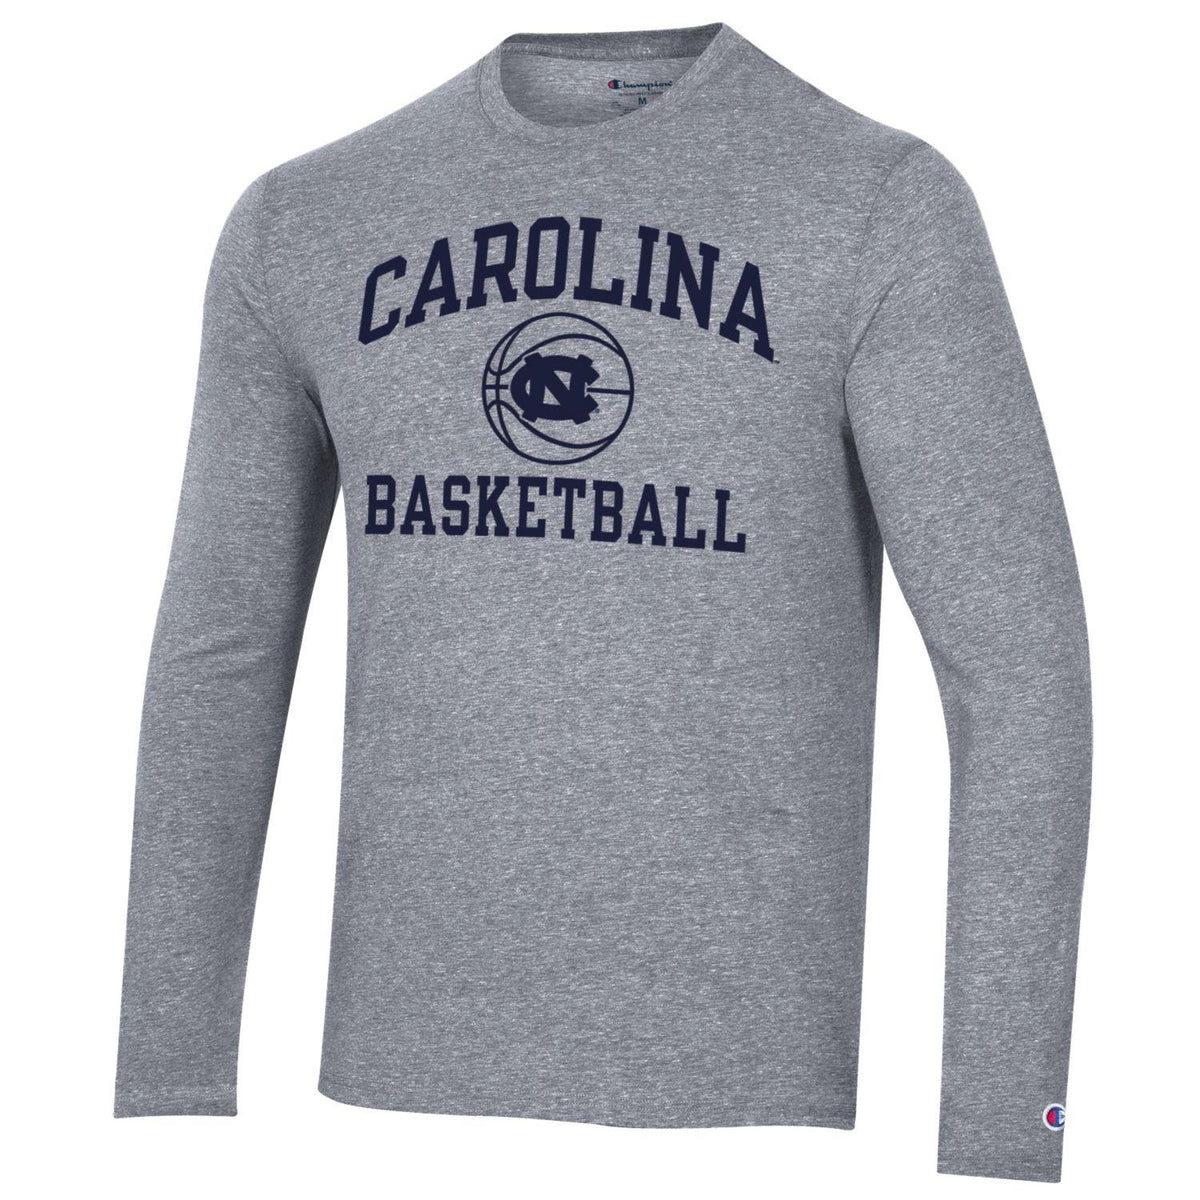 Champion - Carolina Basketball Tri-Blend Long Sleeve T-shirt